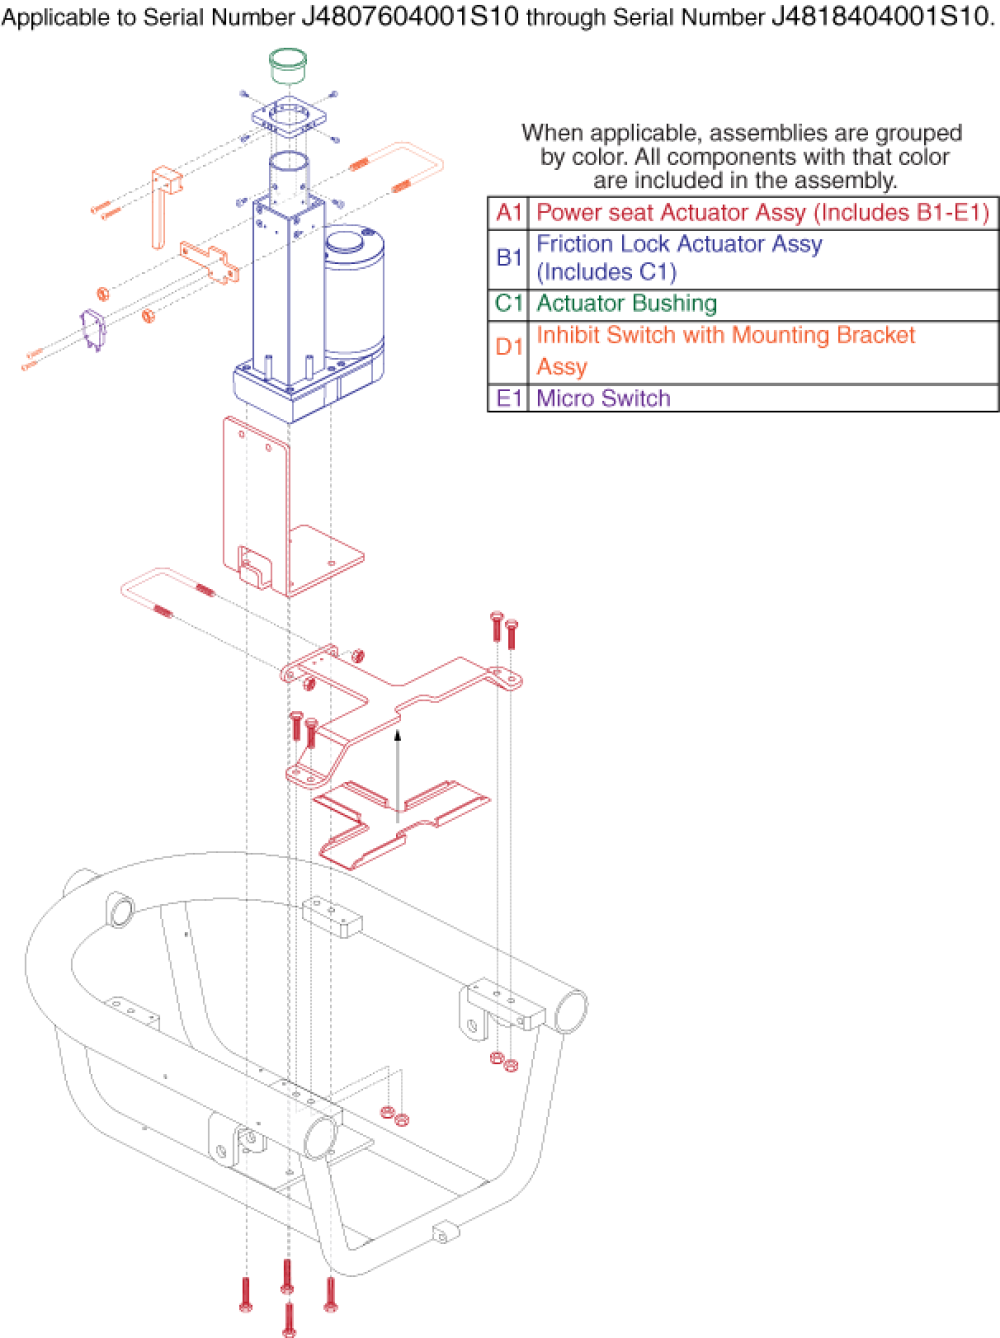 Power Seat Actuator - Gen 2 parts diagram